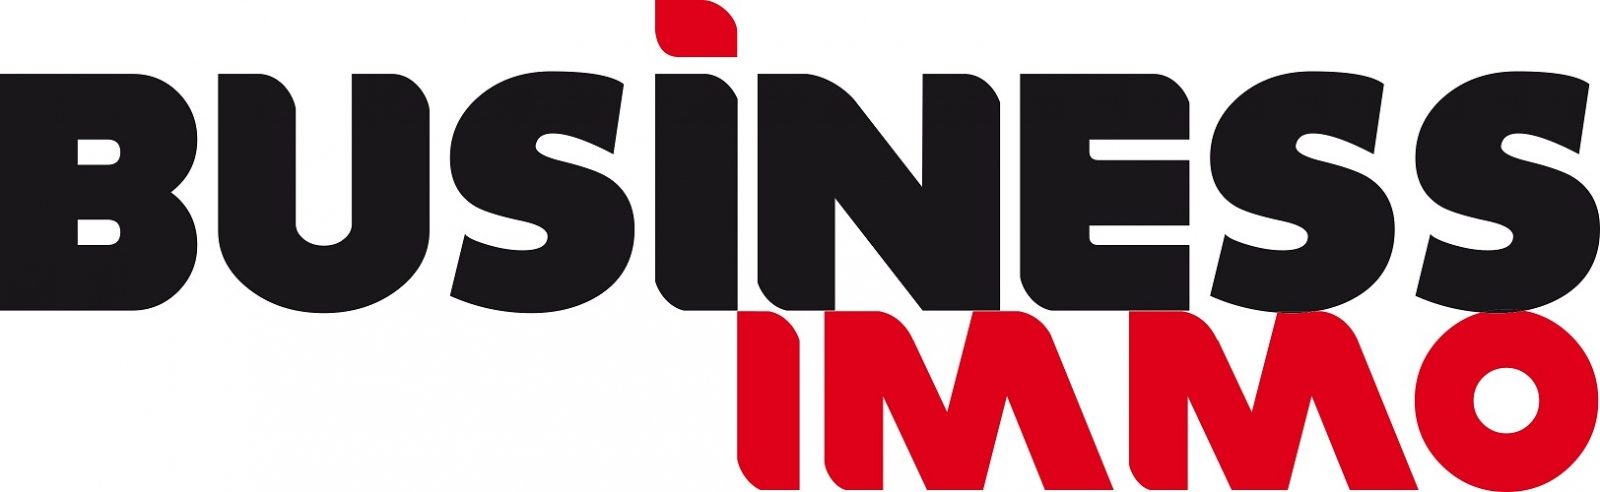 business immo logo